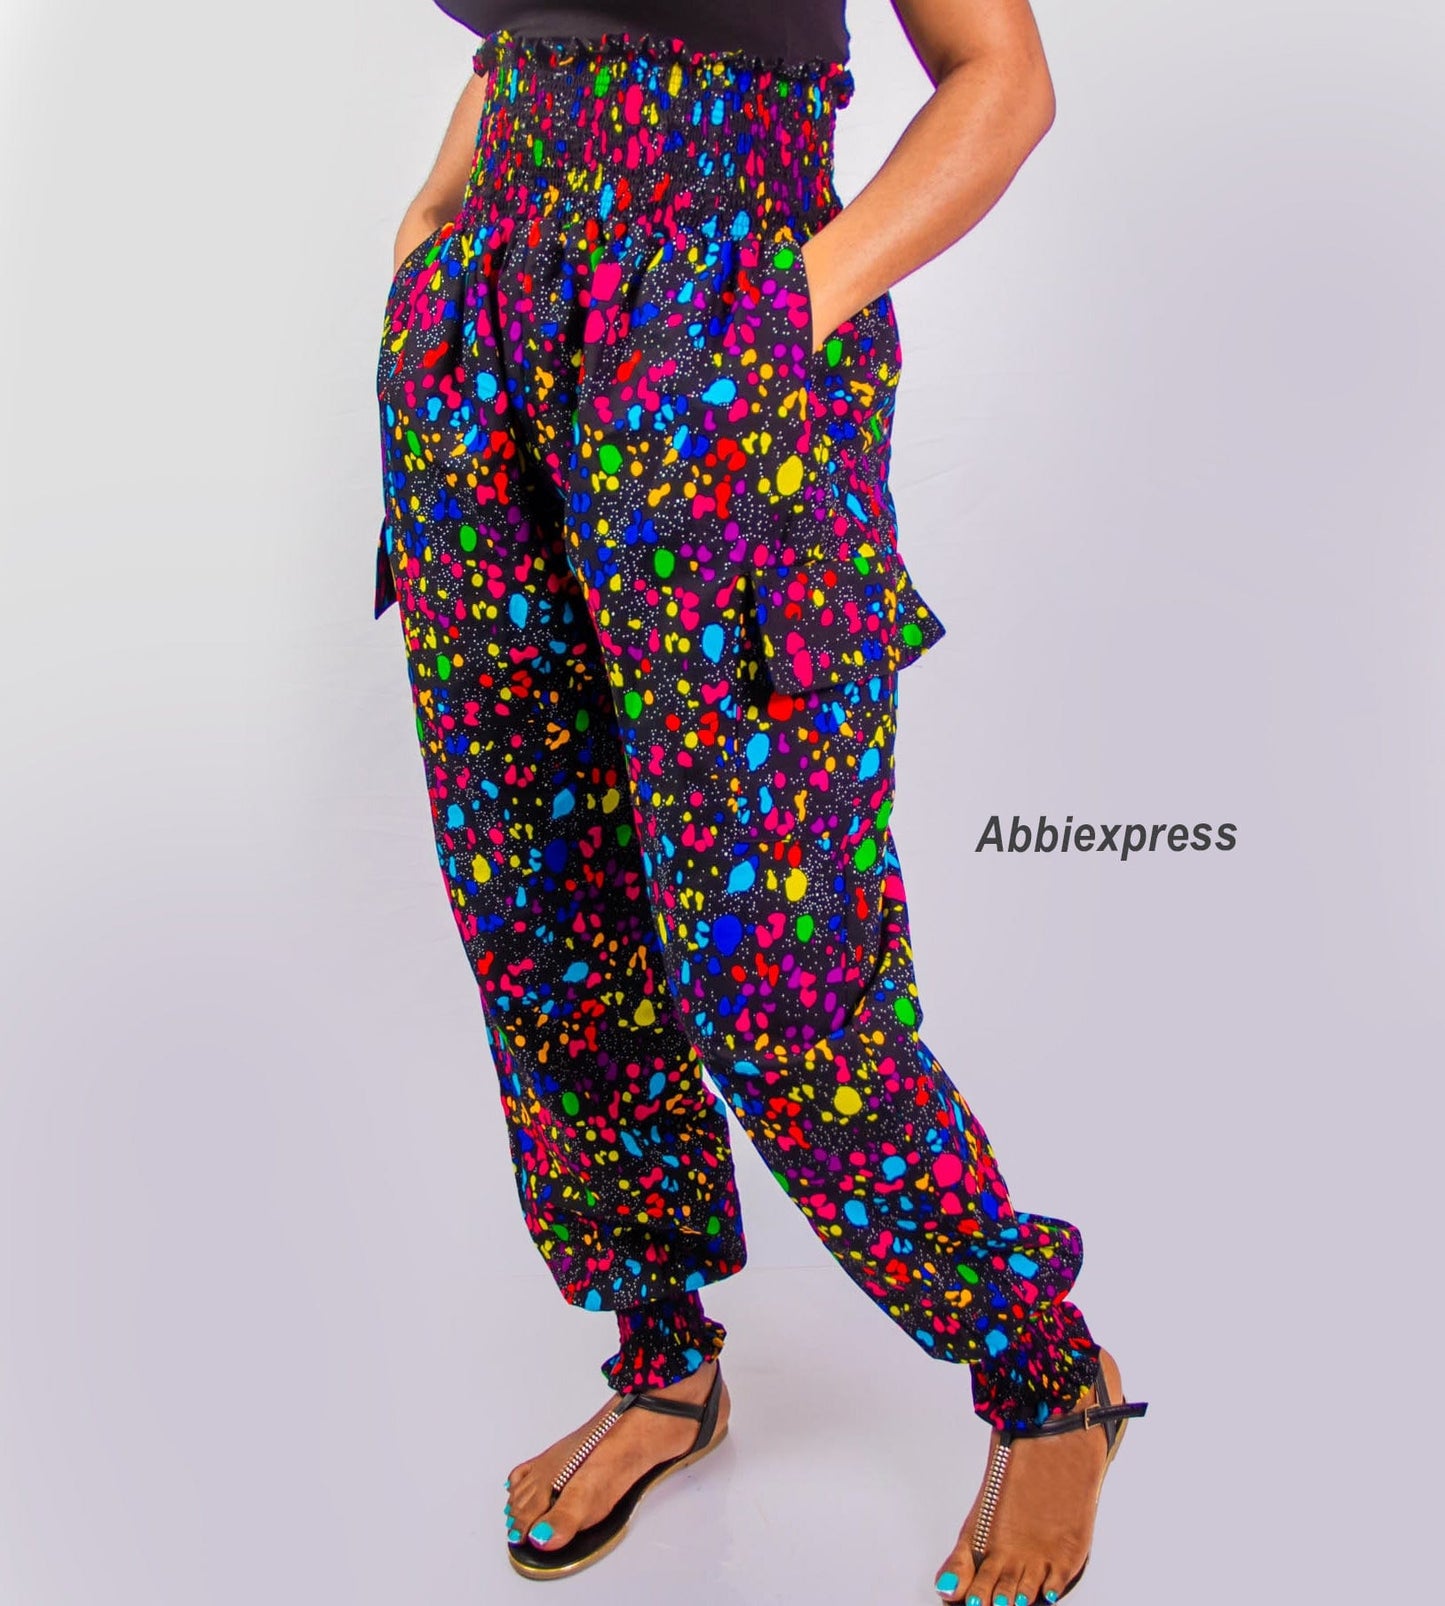 Abbiexpress AFRICAN WOMEN'S WEAR Multicolor / Cotton / M, L, XL, XXL Ankara long pants paired with a matching Sun hat